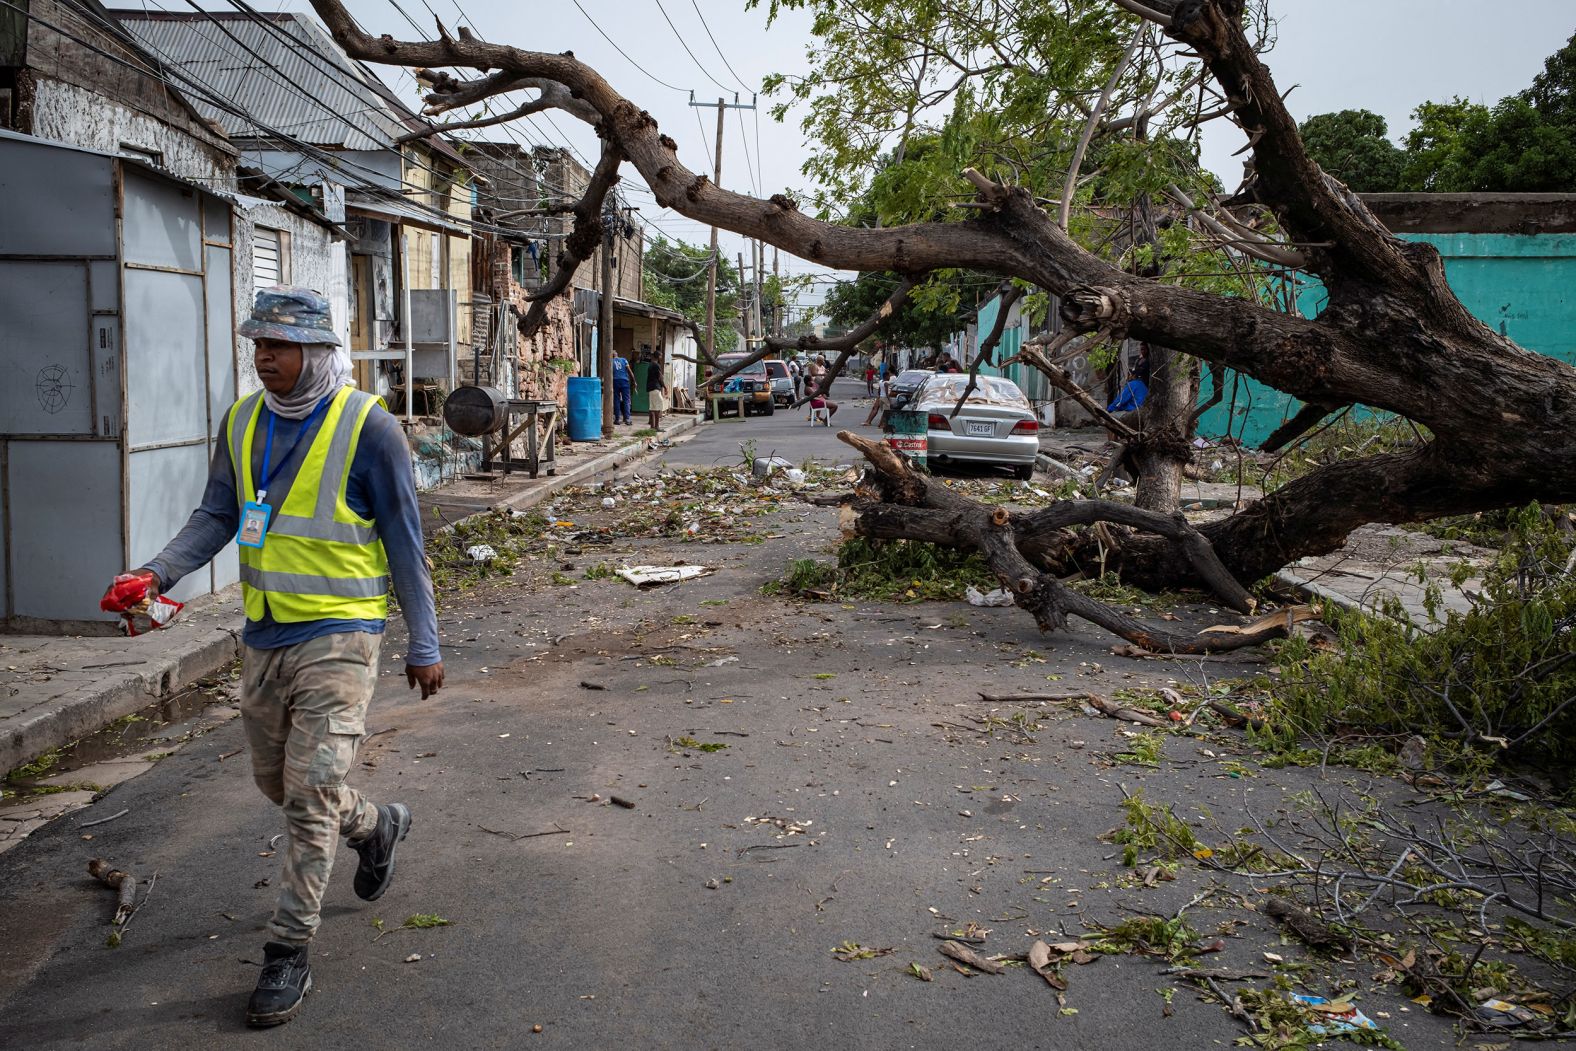 A man walks past a fallen tree in Kingston, Jamaica, on Thursday.